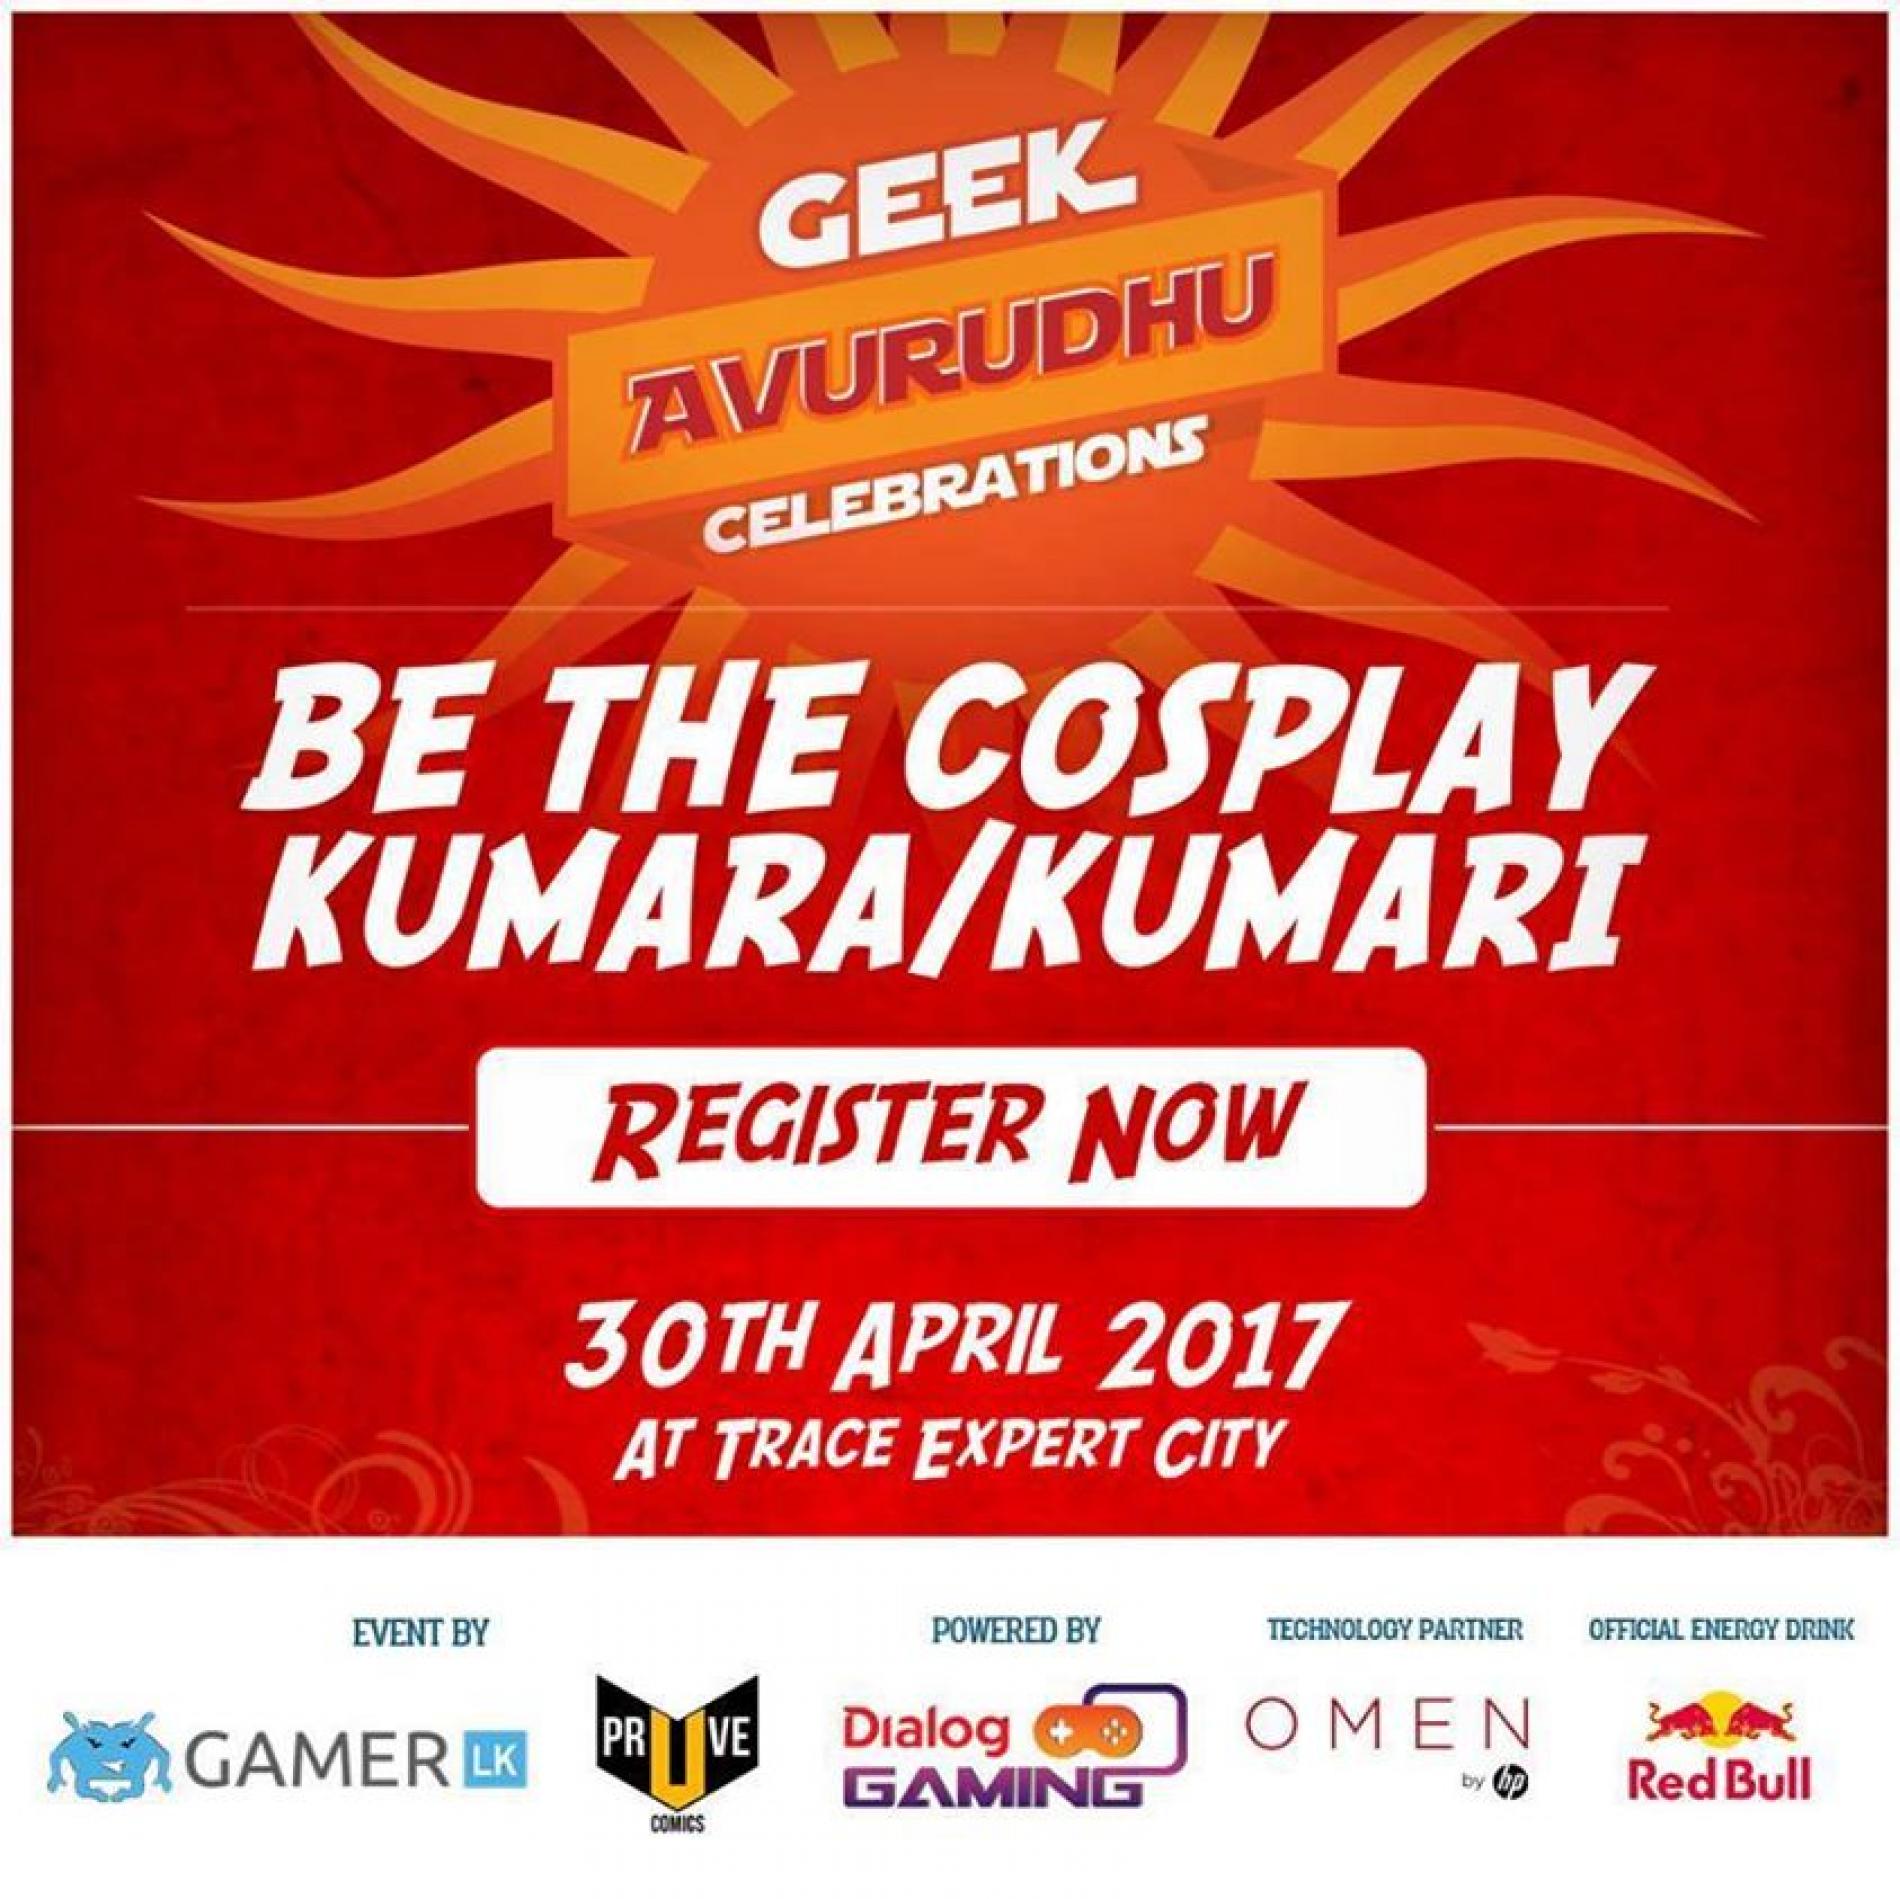 Geek Avurudu Celebrations